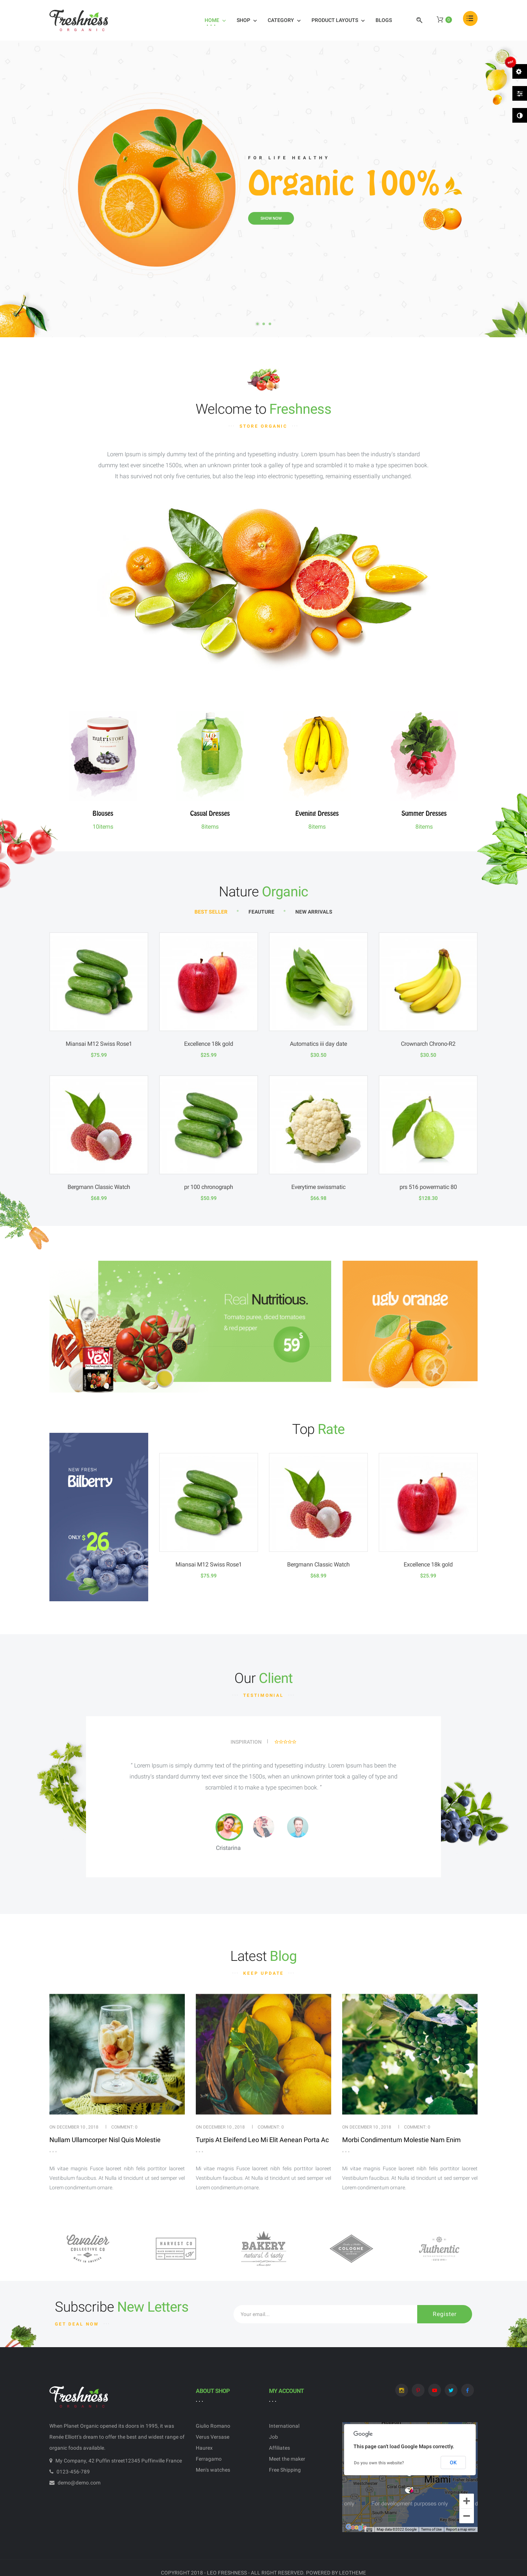 Mẫu giao diện website Thực phẩm Freshness